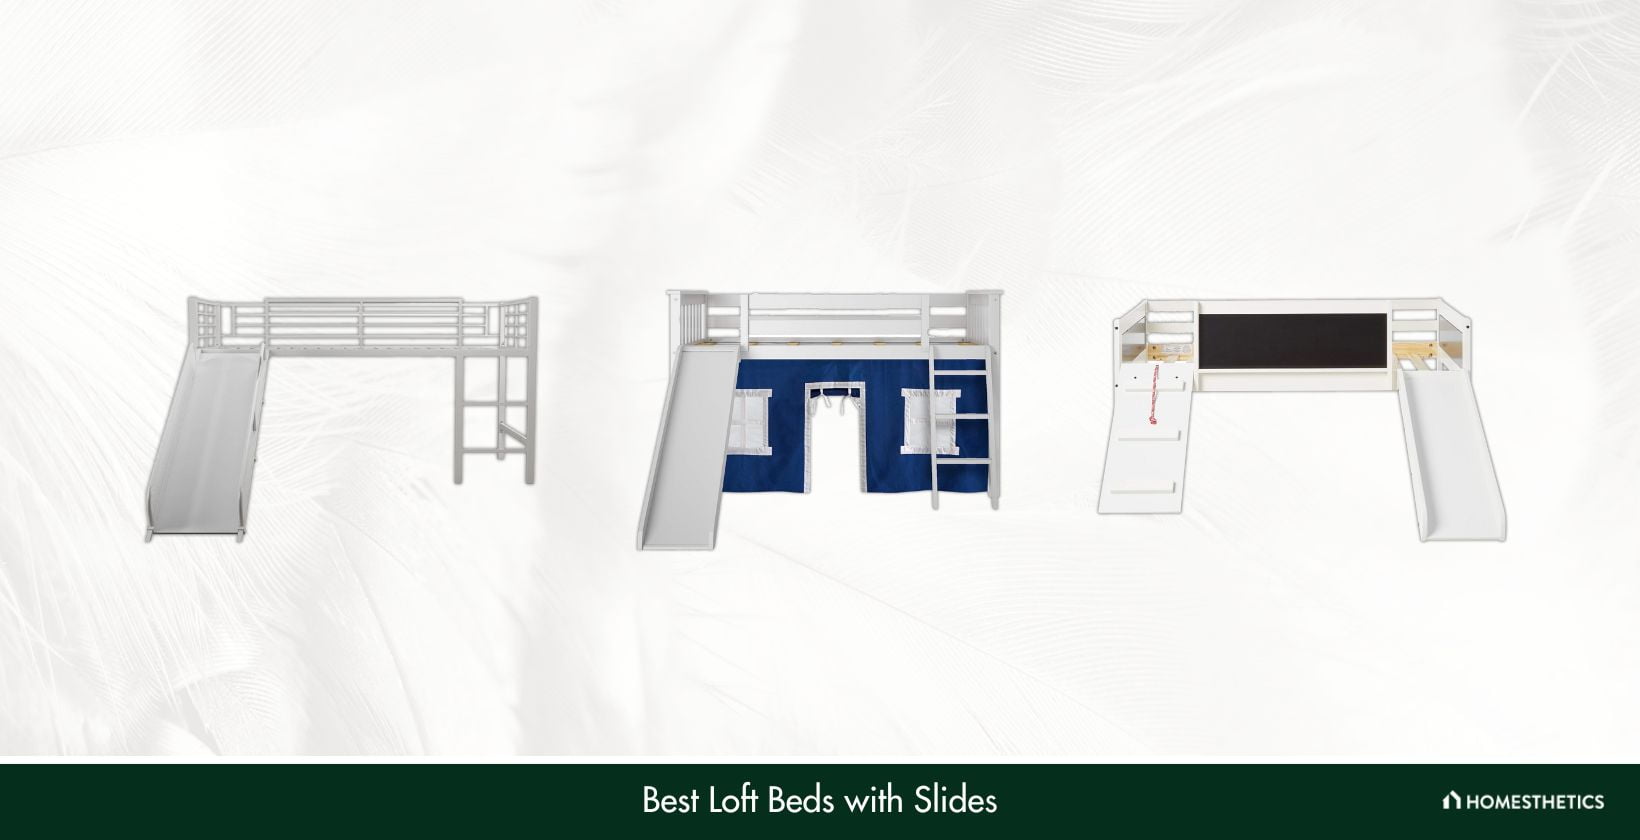 Best Loft Beds with Slides